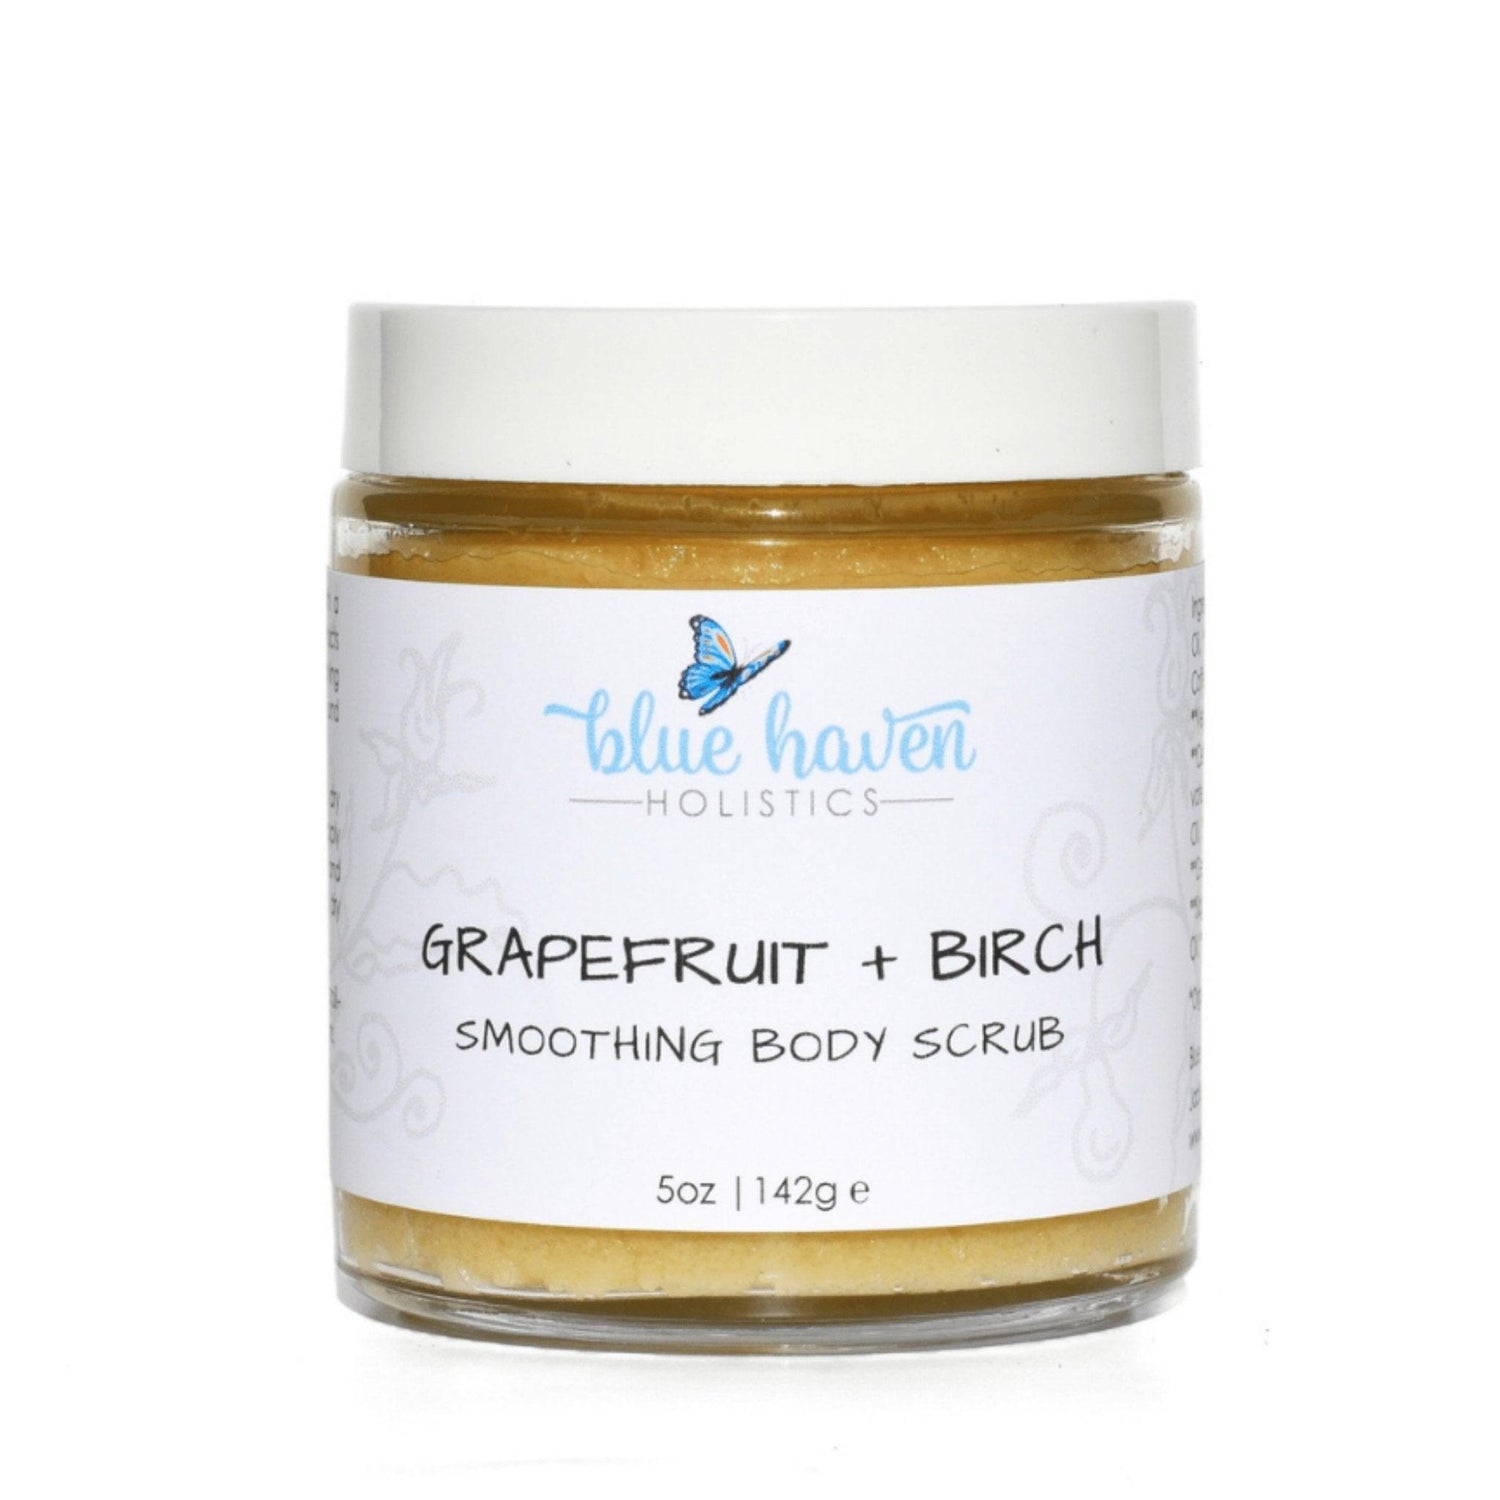 Grapefruit + Birch Smoothing Body Scrub - Blue Haven Holistics